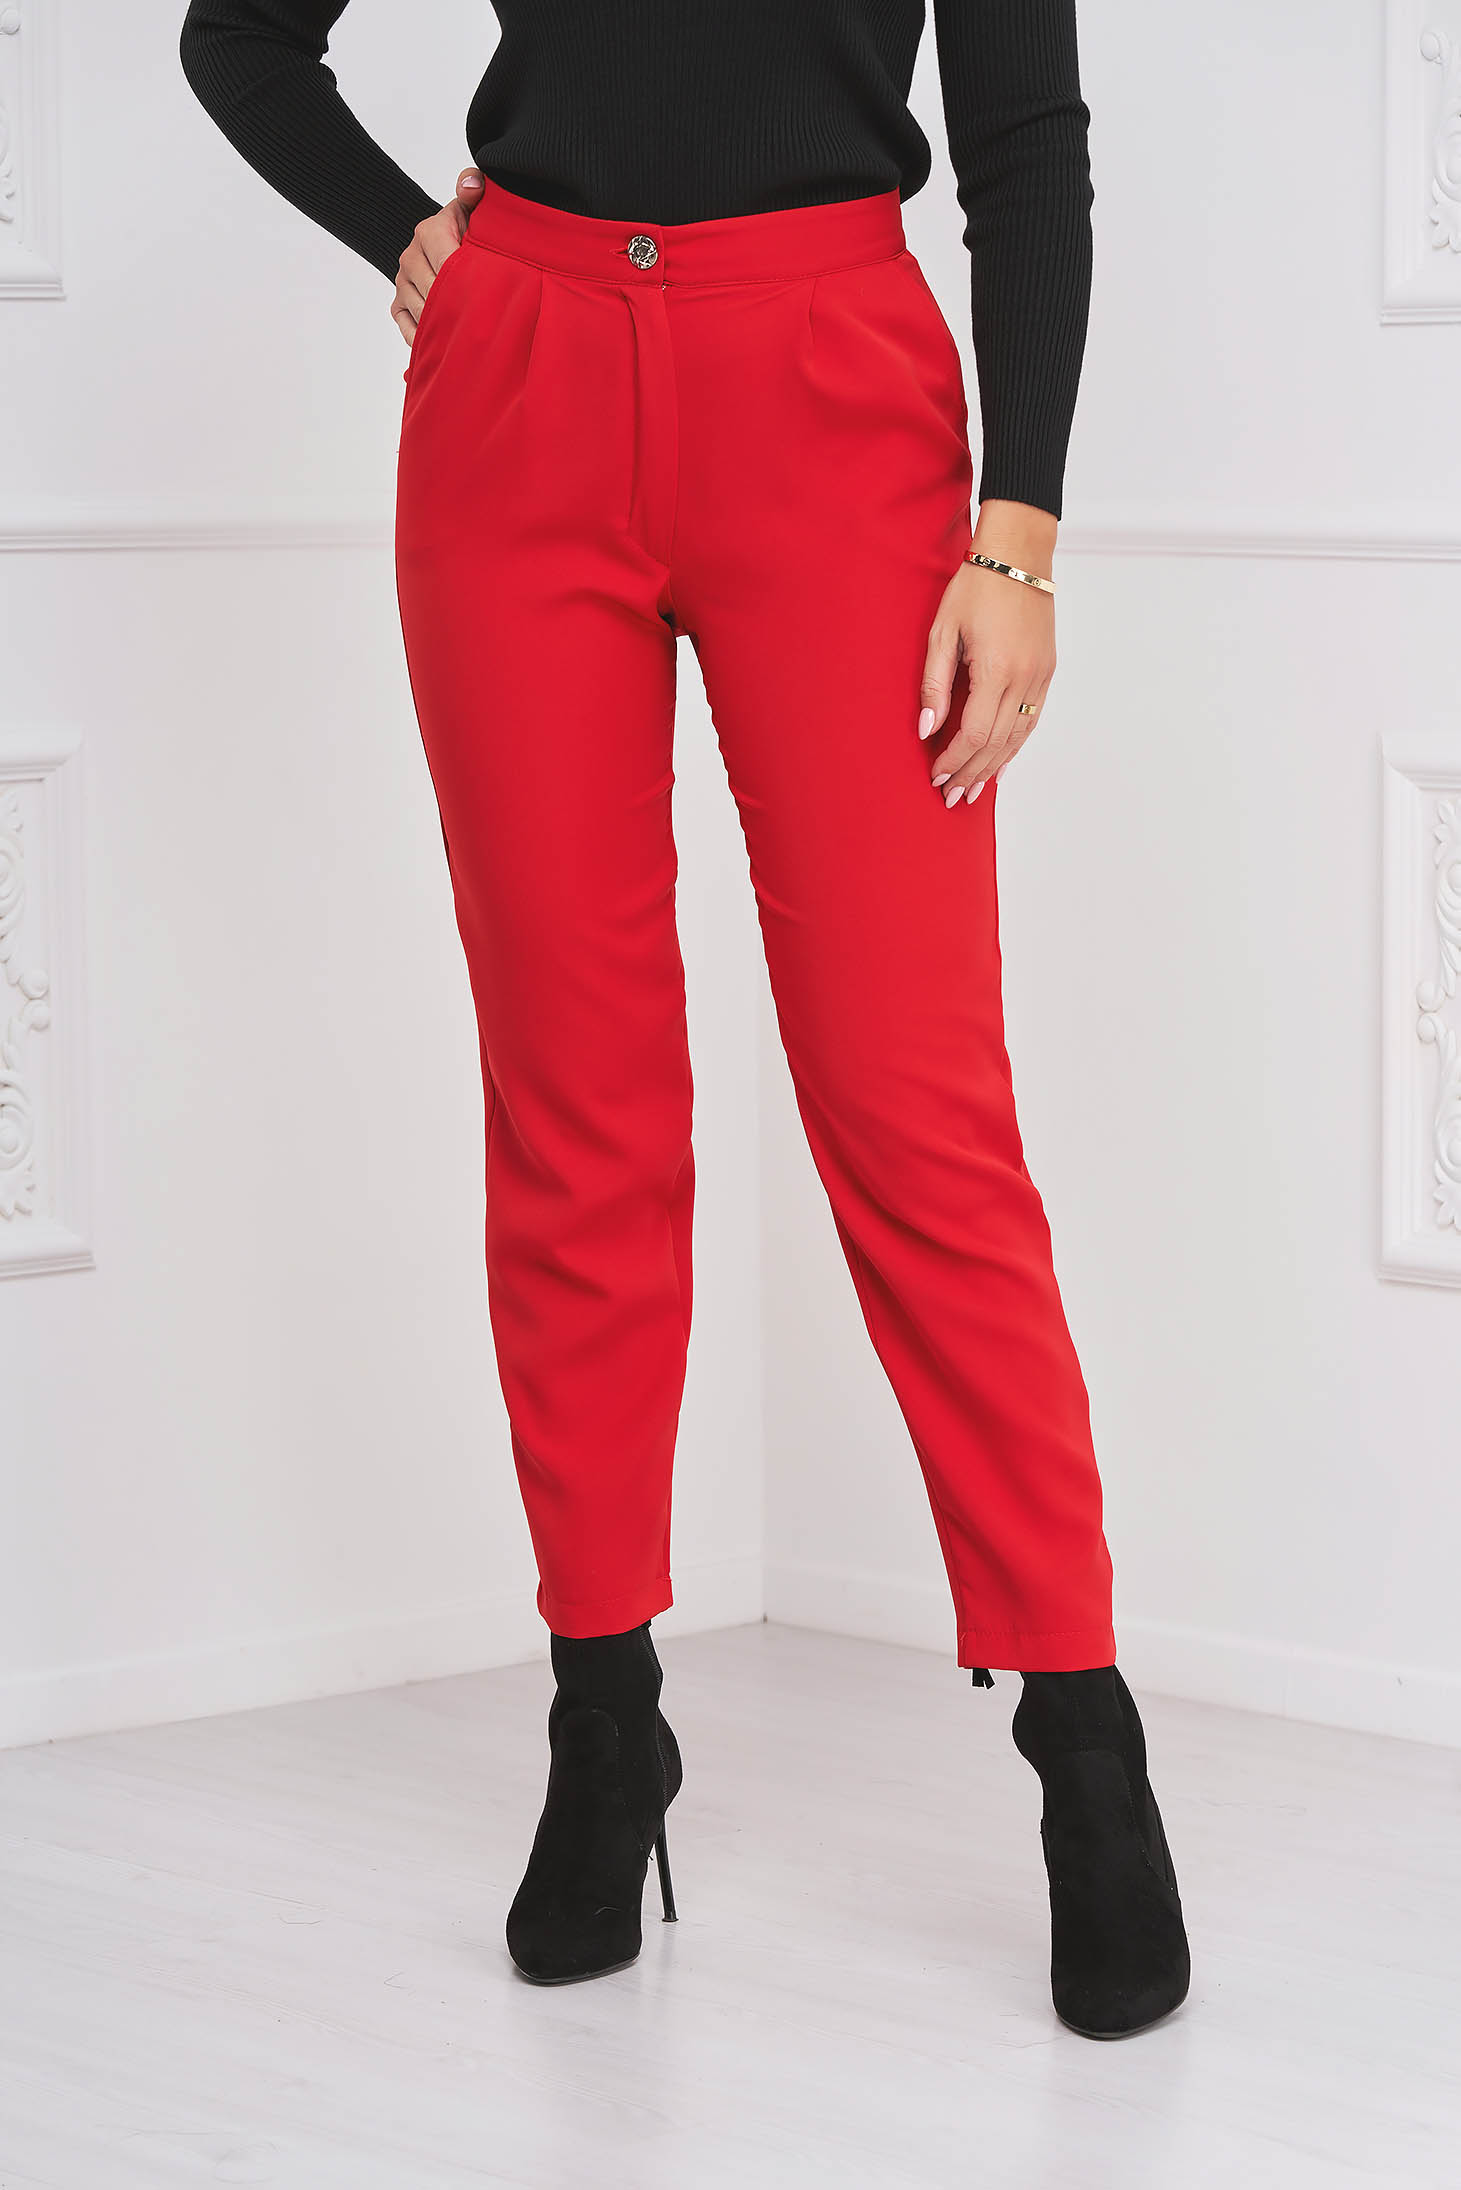 Pantaloni din stofa elastica rosii conici cu talie normala si buzunare laterale - StarShinerS